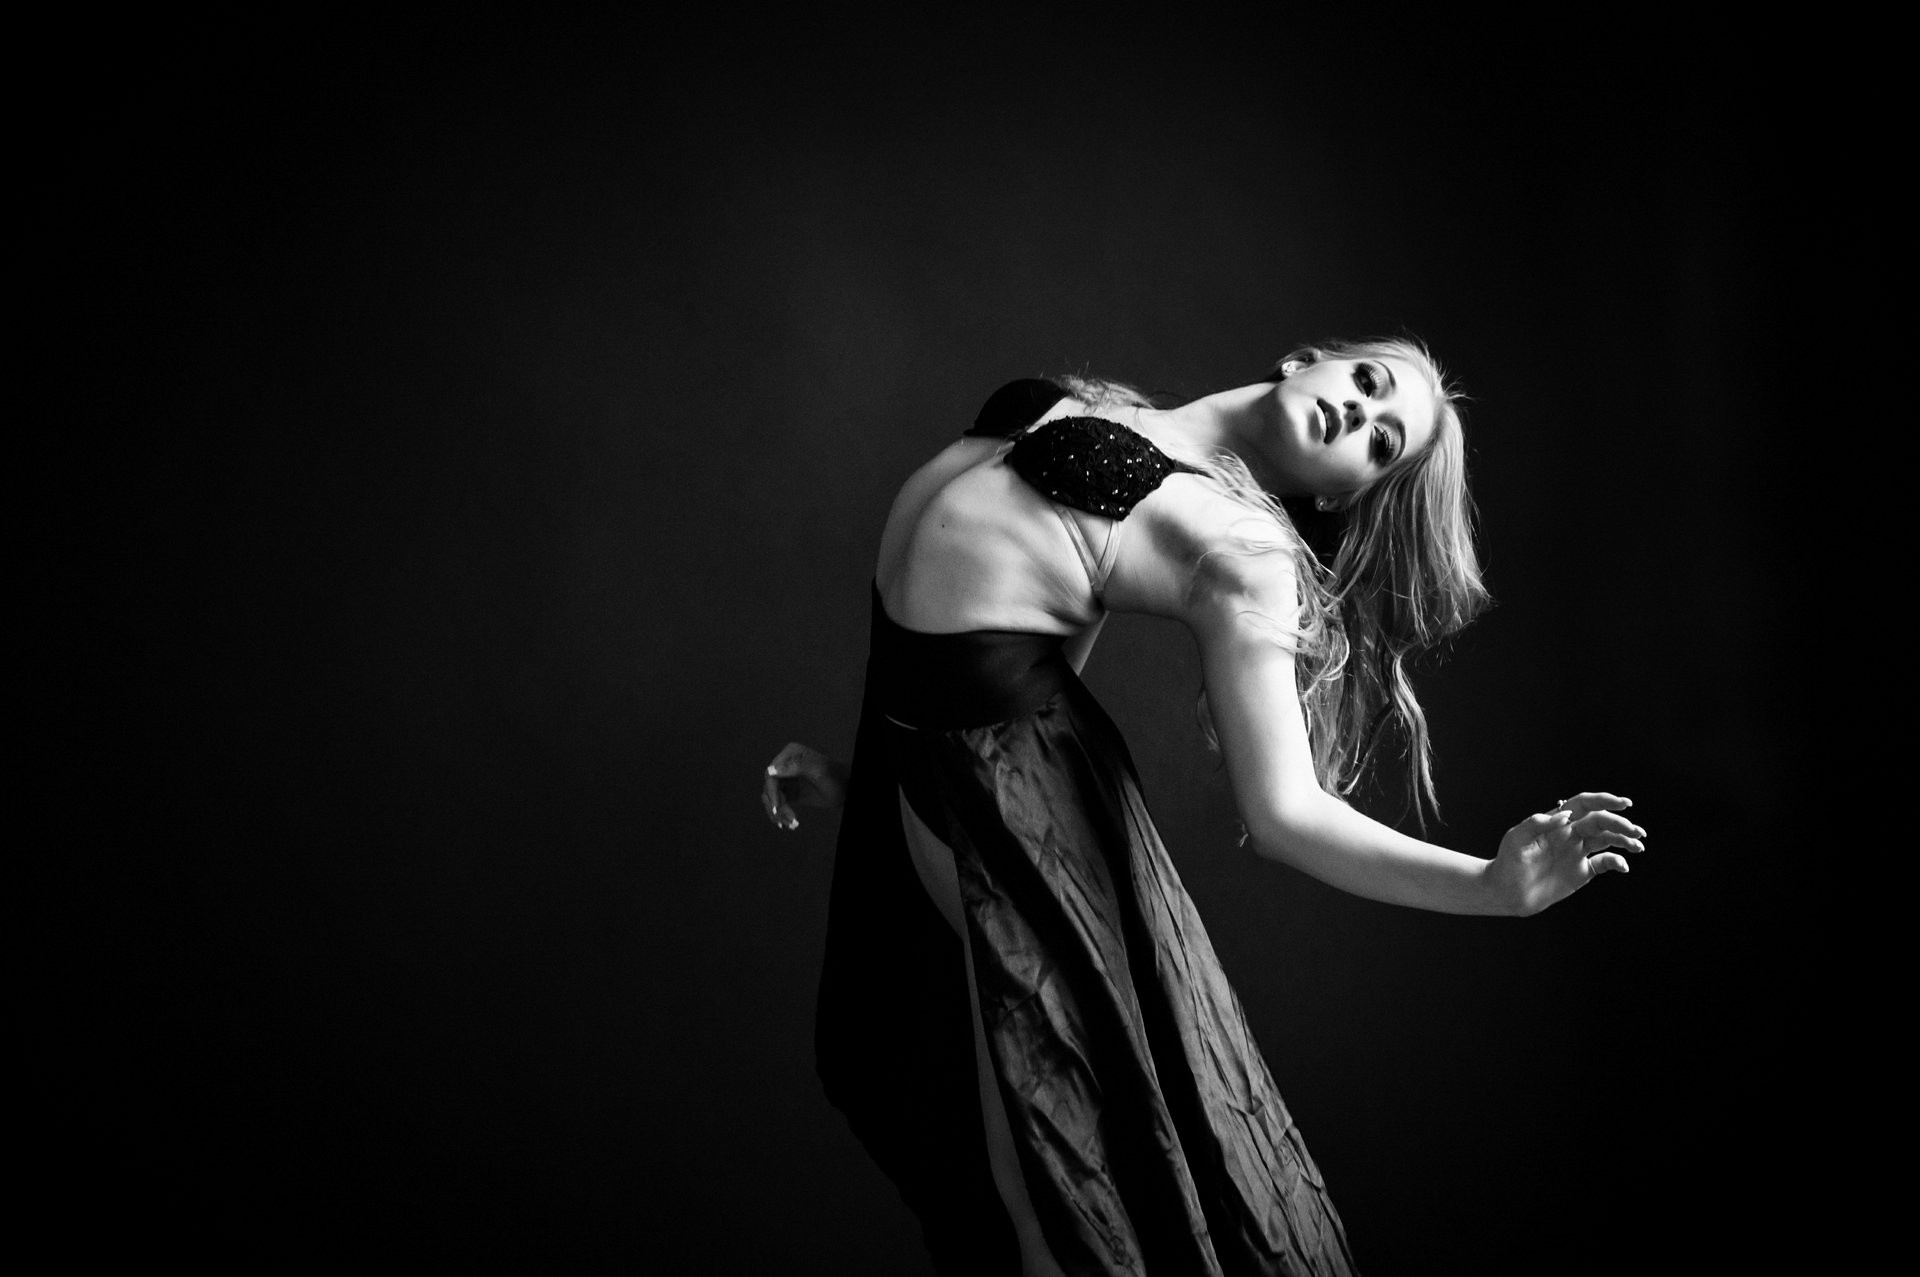 nEO_IMG_Xing Photography Soul of Dance - Haley-52-BW.jpg